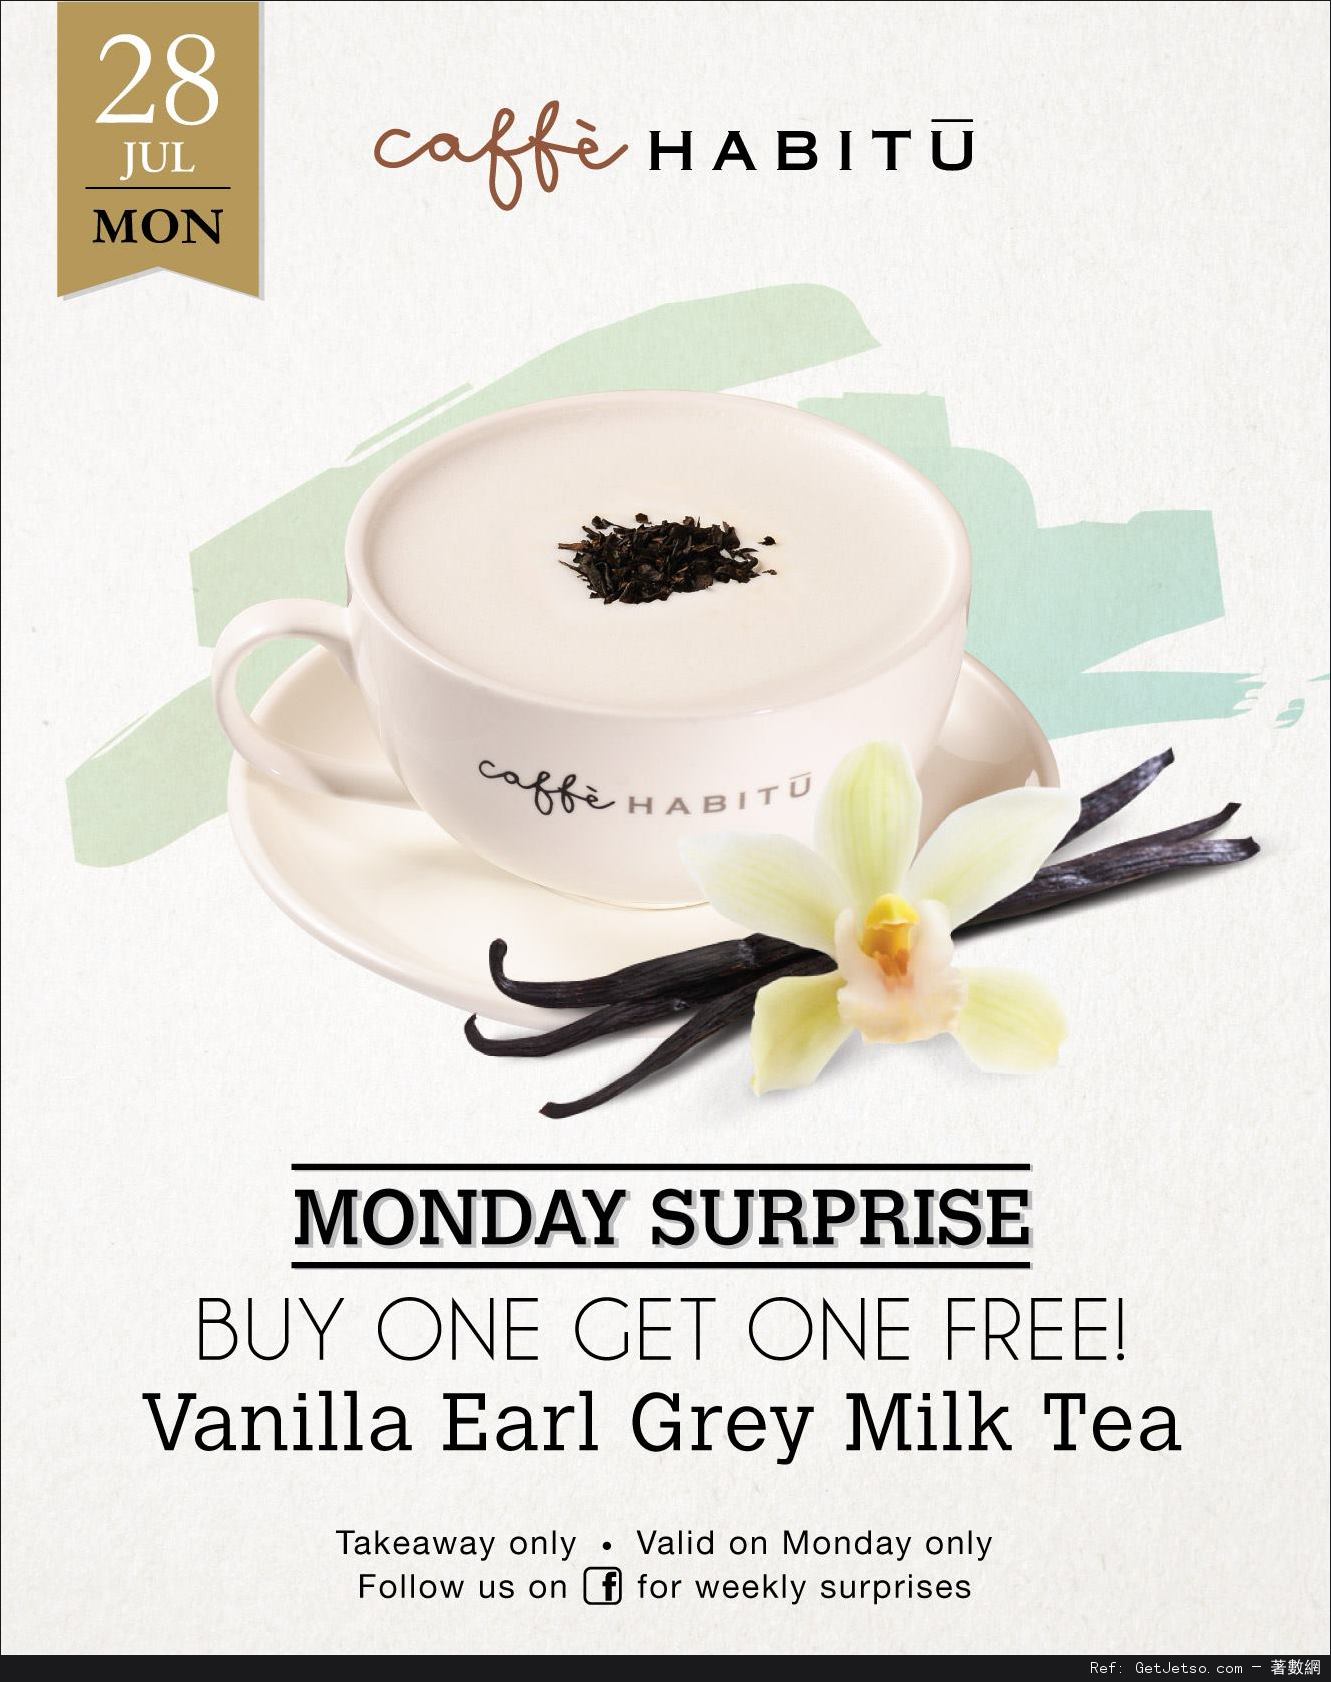 Caffe HABITU Vanilla Earl Grey Milk Tea 買1送1優惠(14年7月28日)圖片1